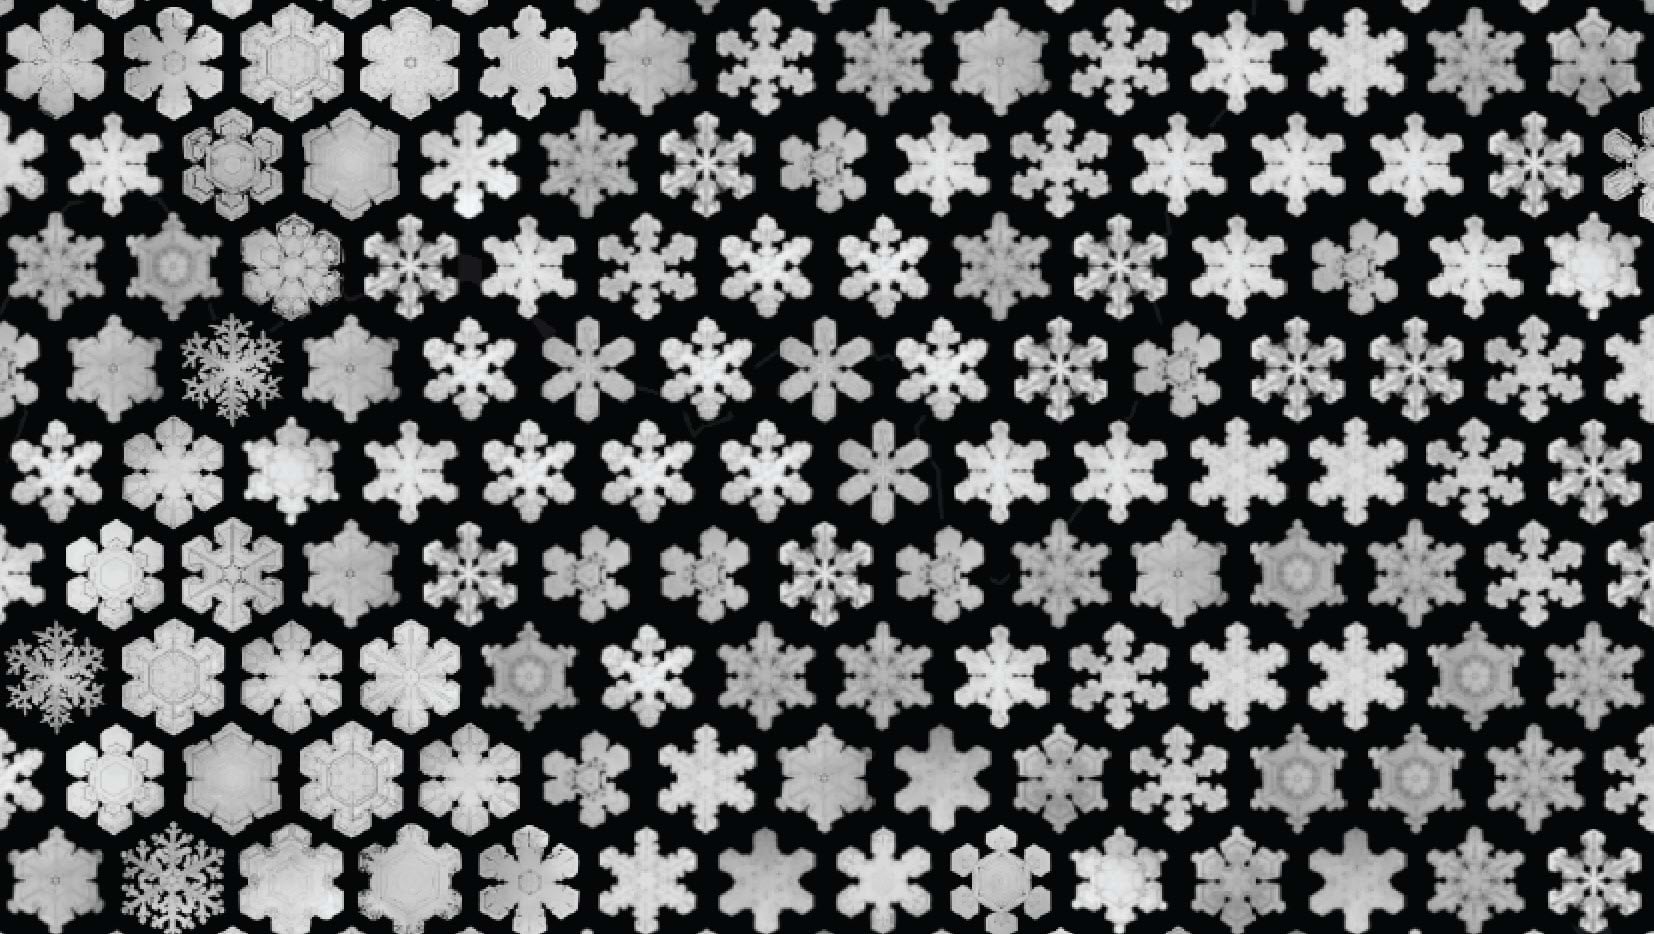 Snowflake symbology